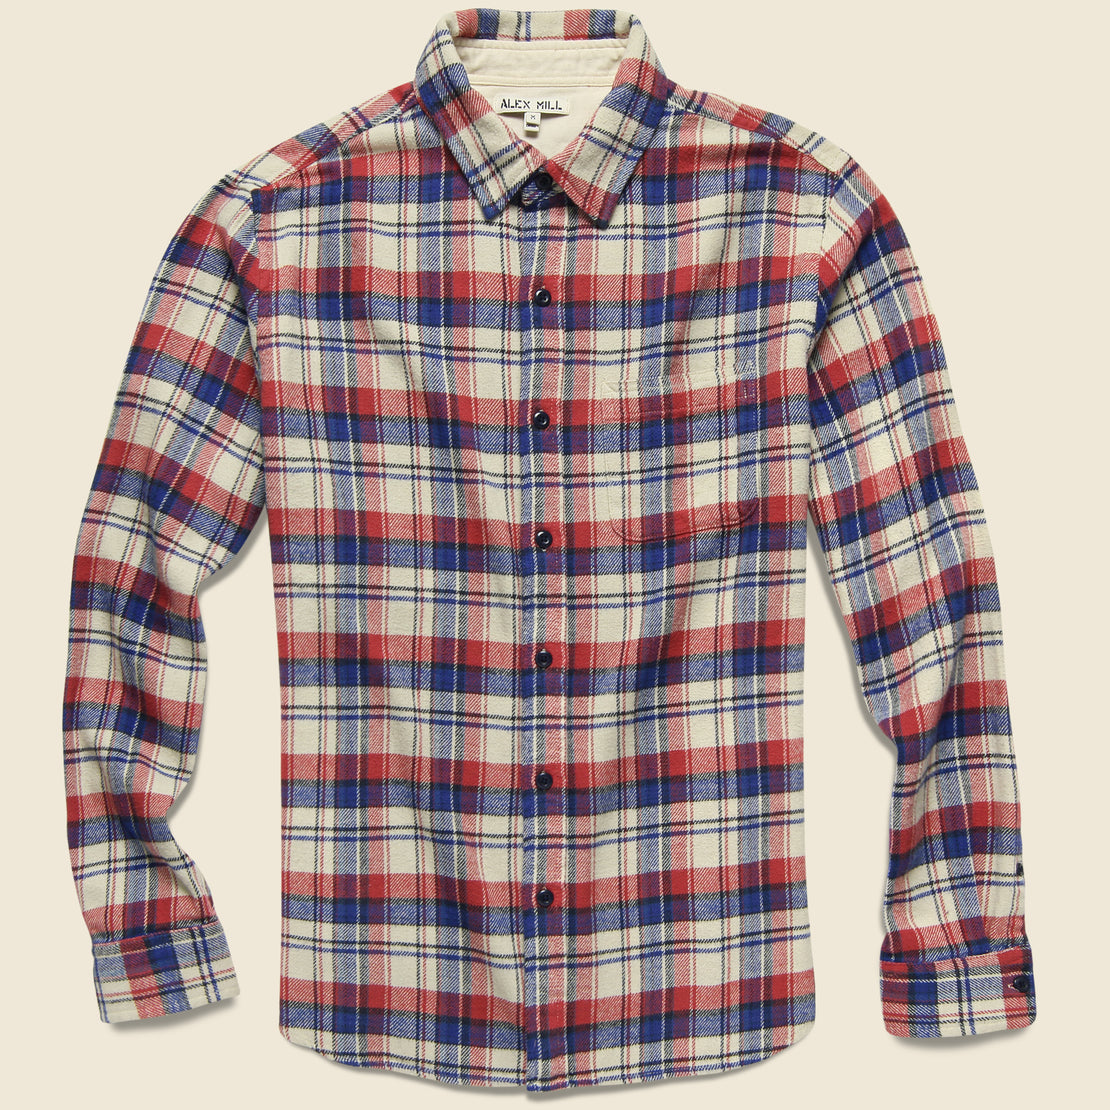 Alex Mill Spring Plaid Flannel Shirt - Red/Blue/Cream